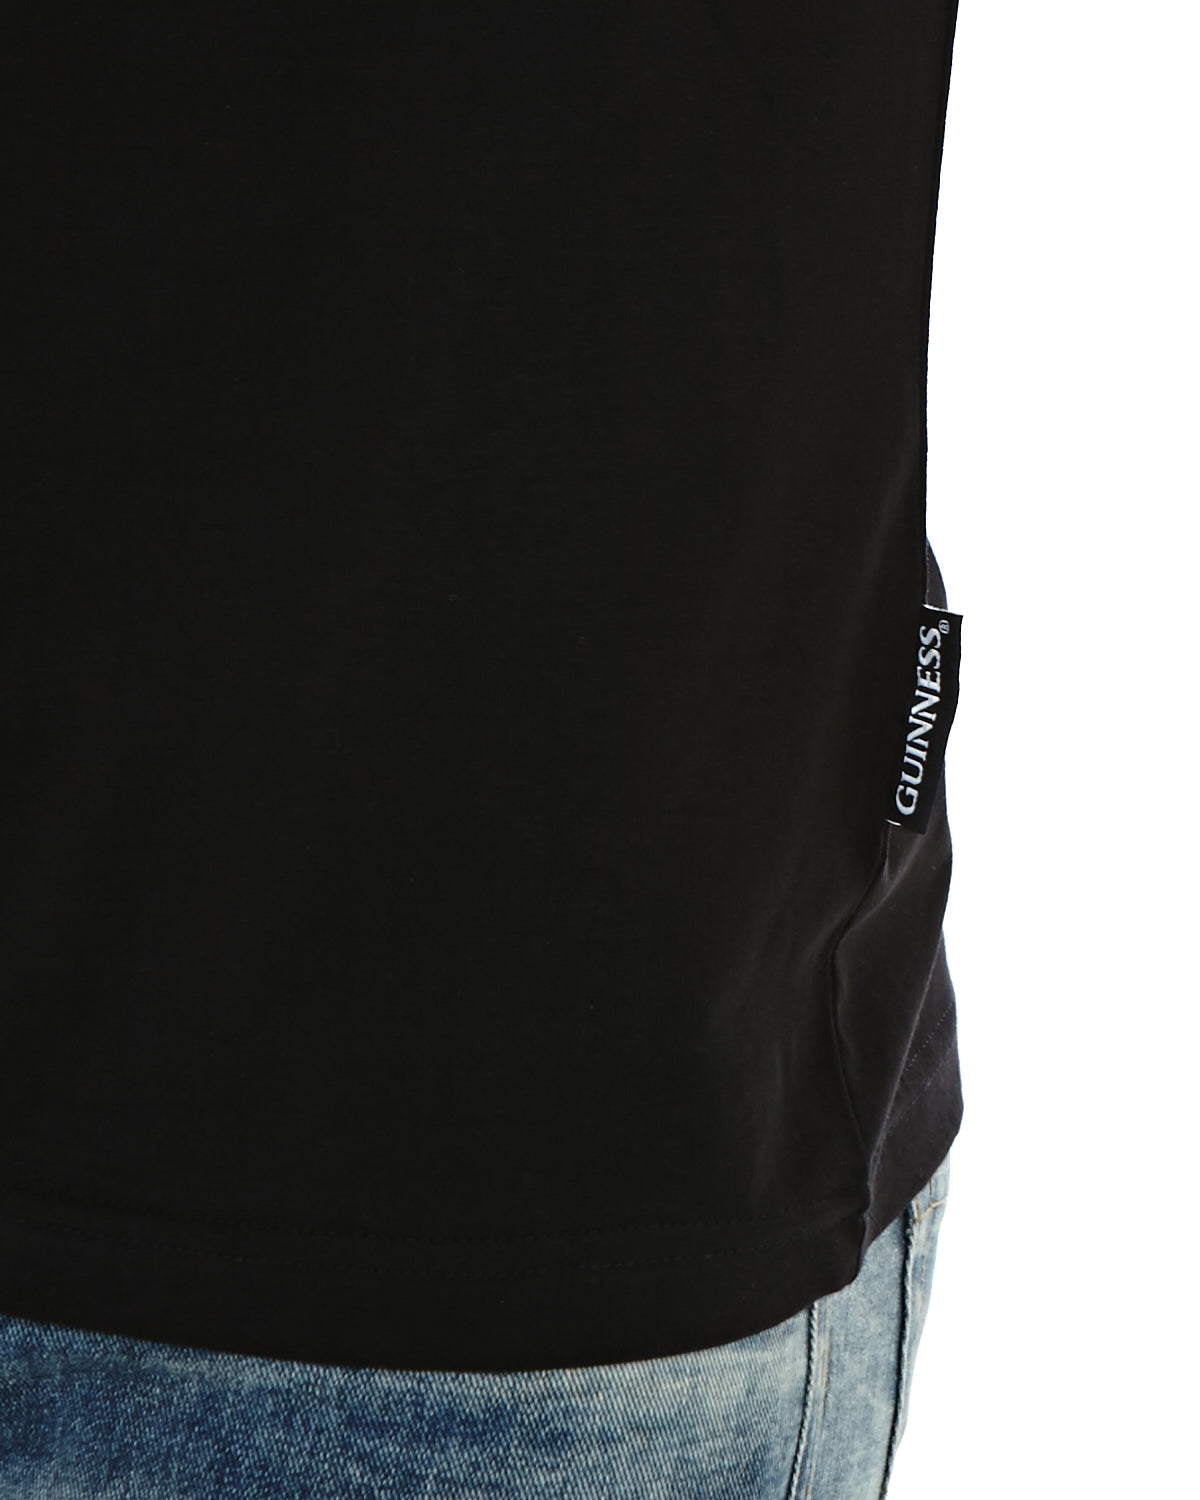 Guinness® Gaelic Label Long Sleeve T-Shirt